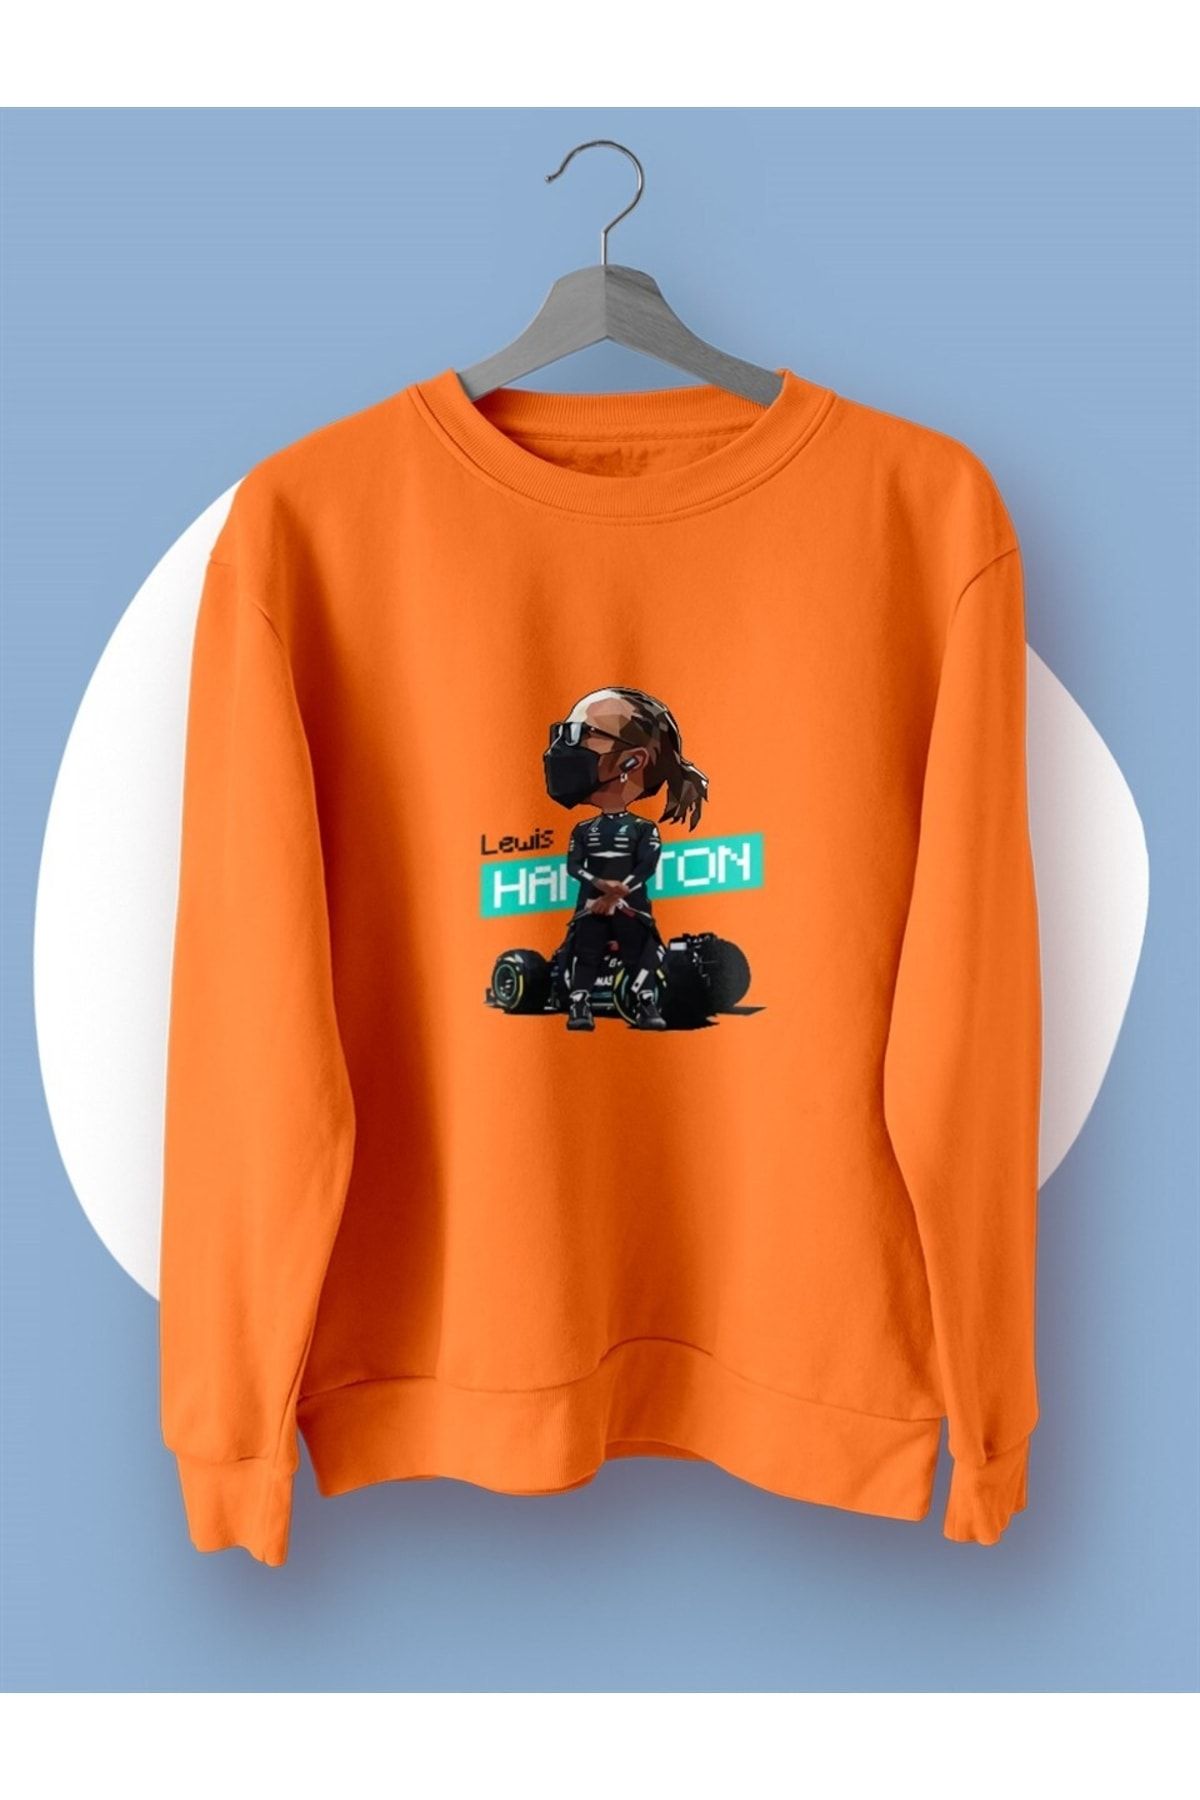 FANBOX SHOP Hamilton Pixel Art Sweatshirt